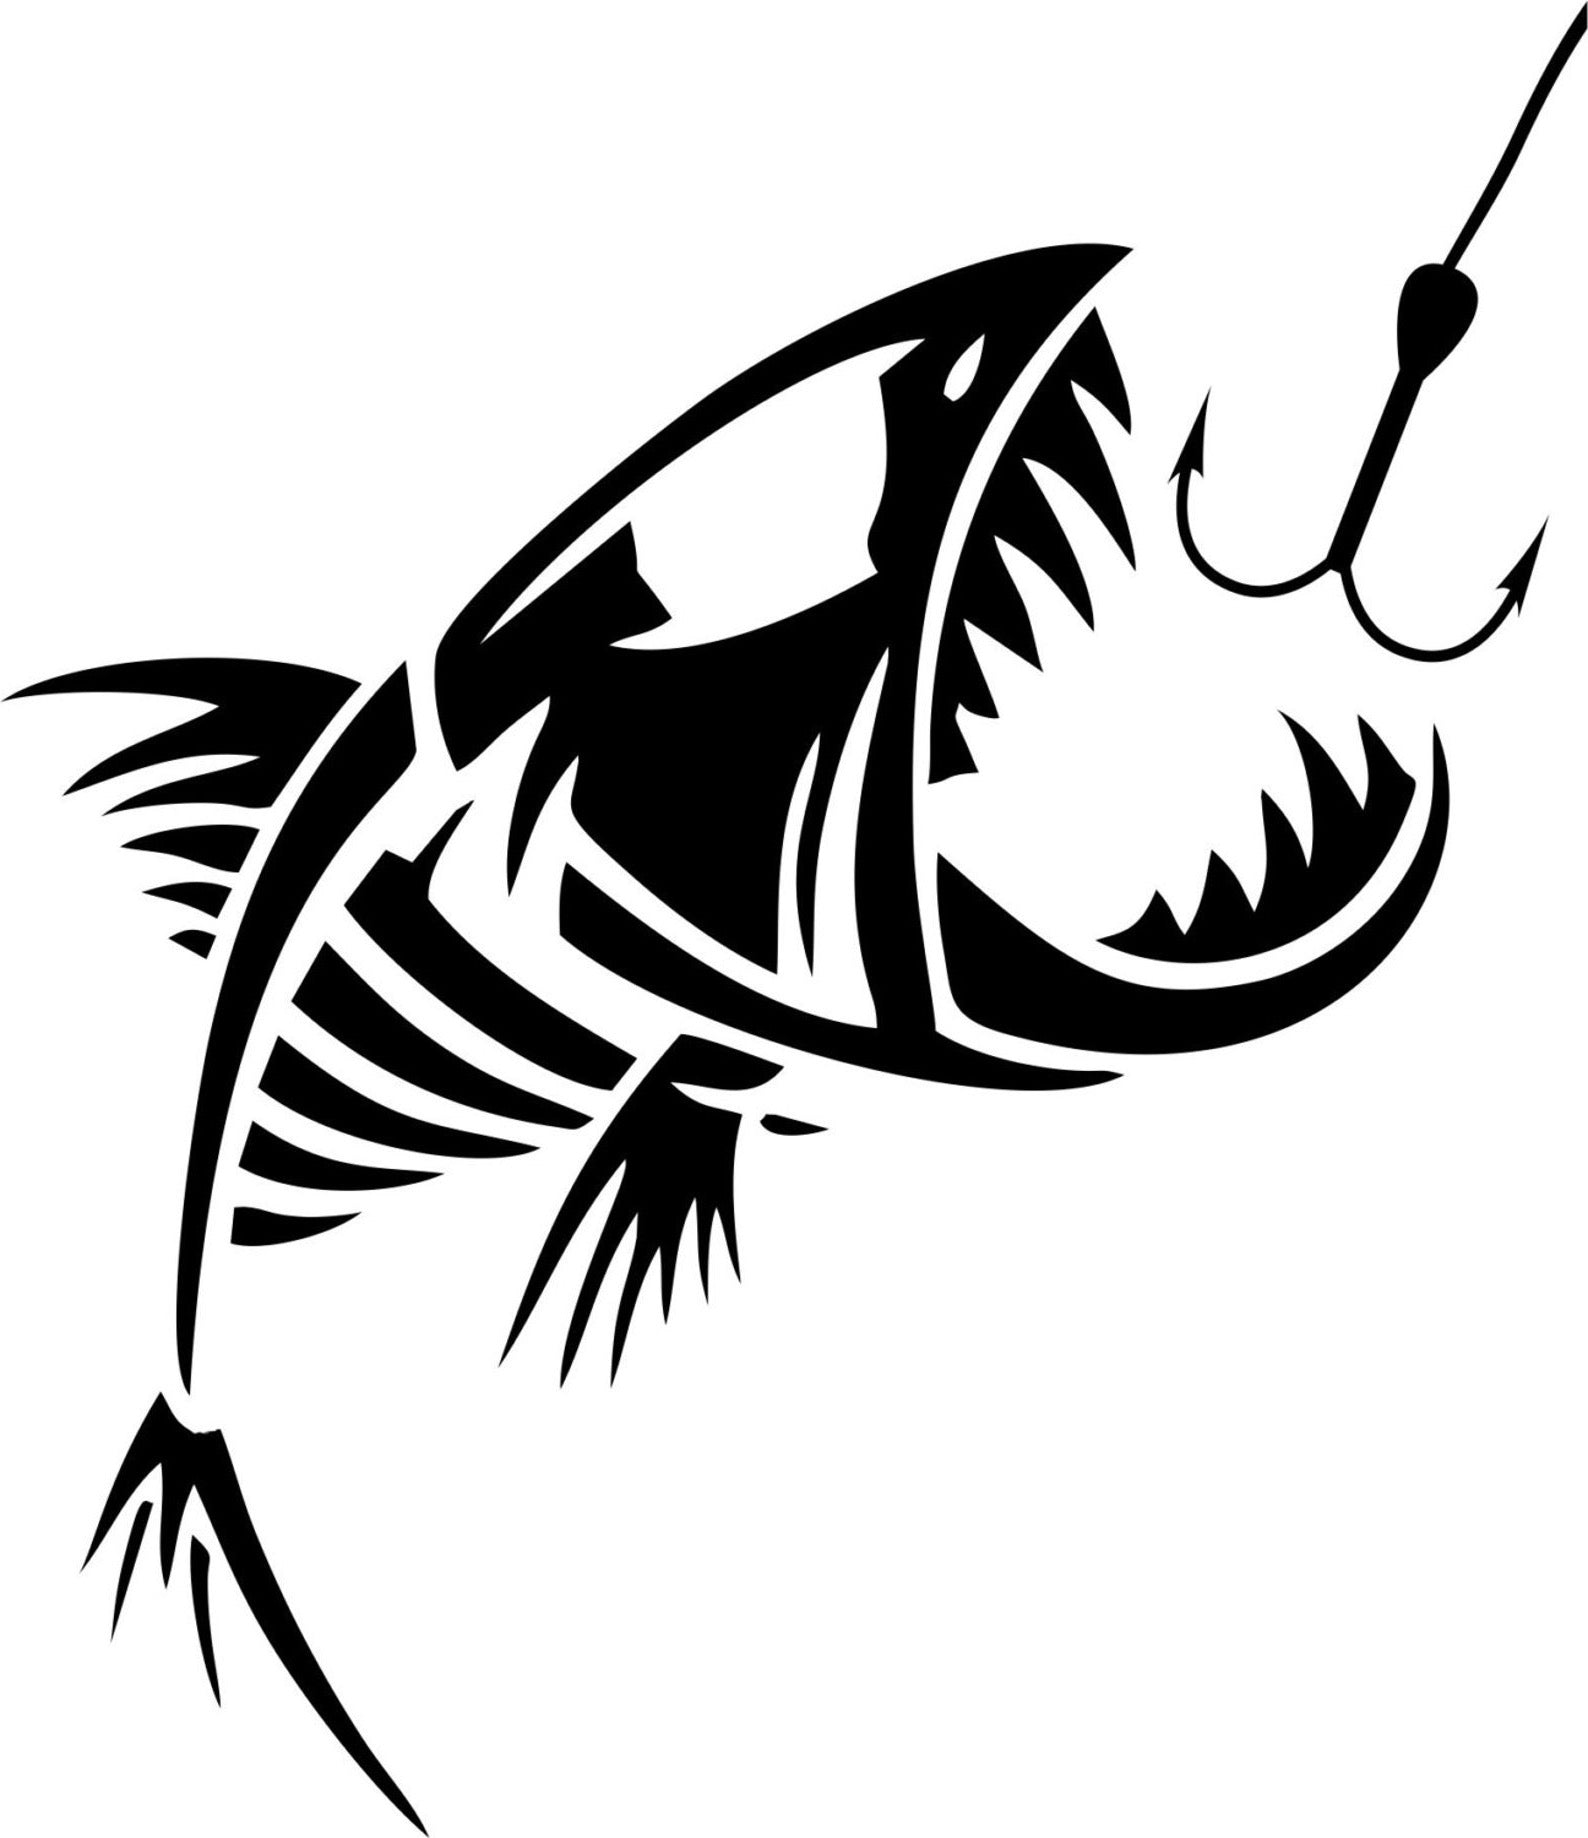 Sticker autocollant poisson pêche- - Déco Sticker Store-3.90€